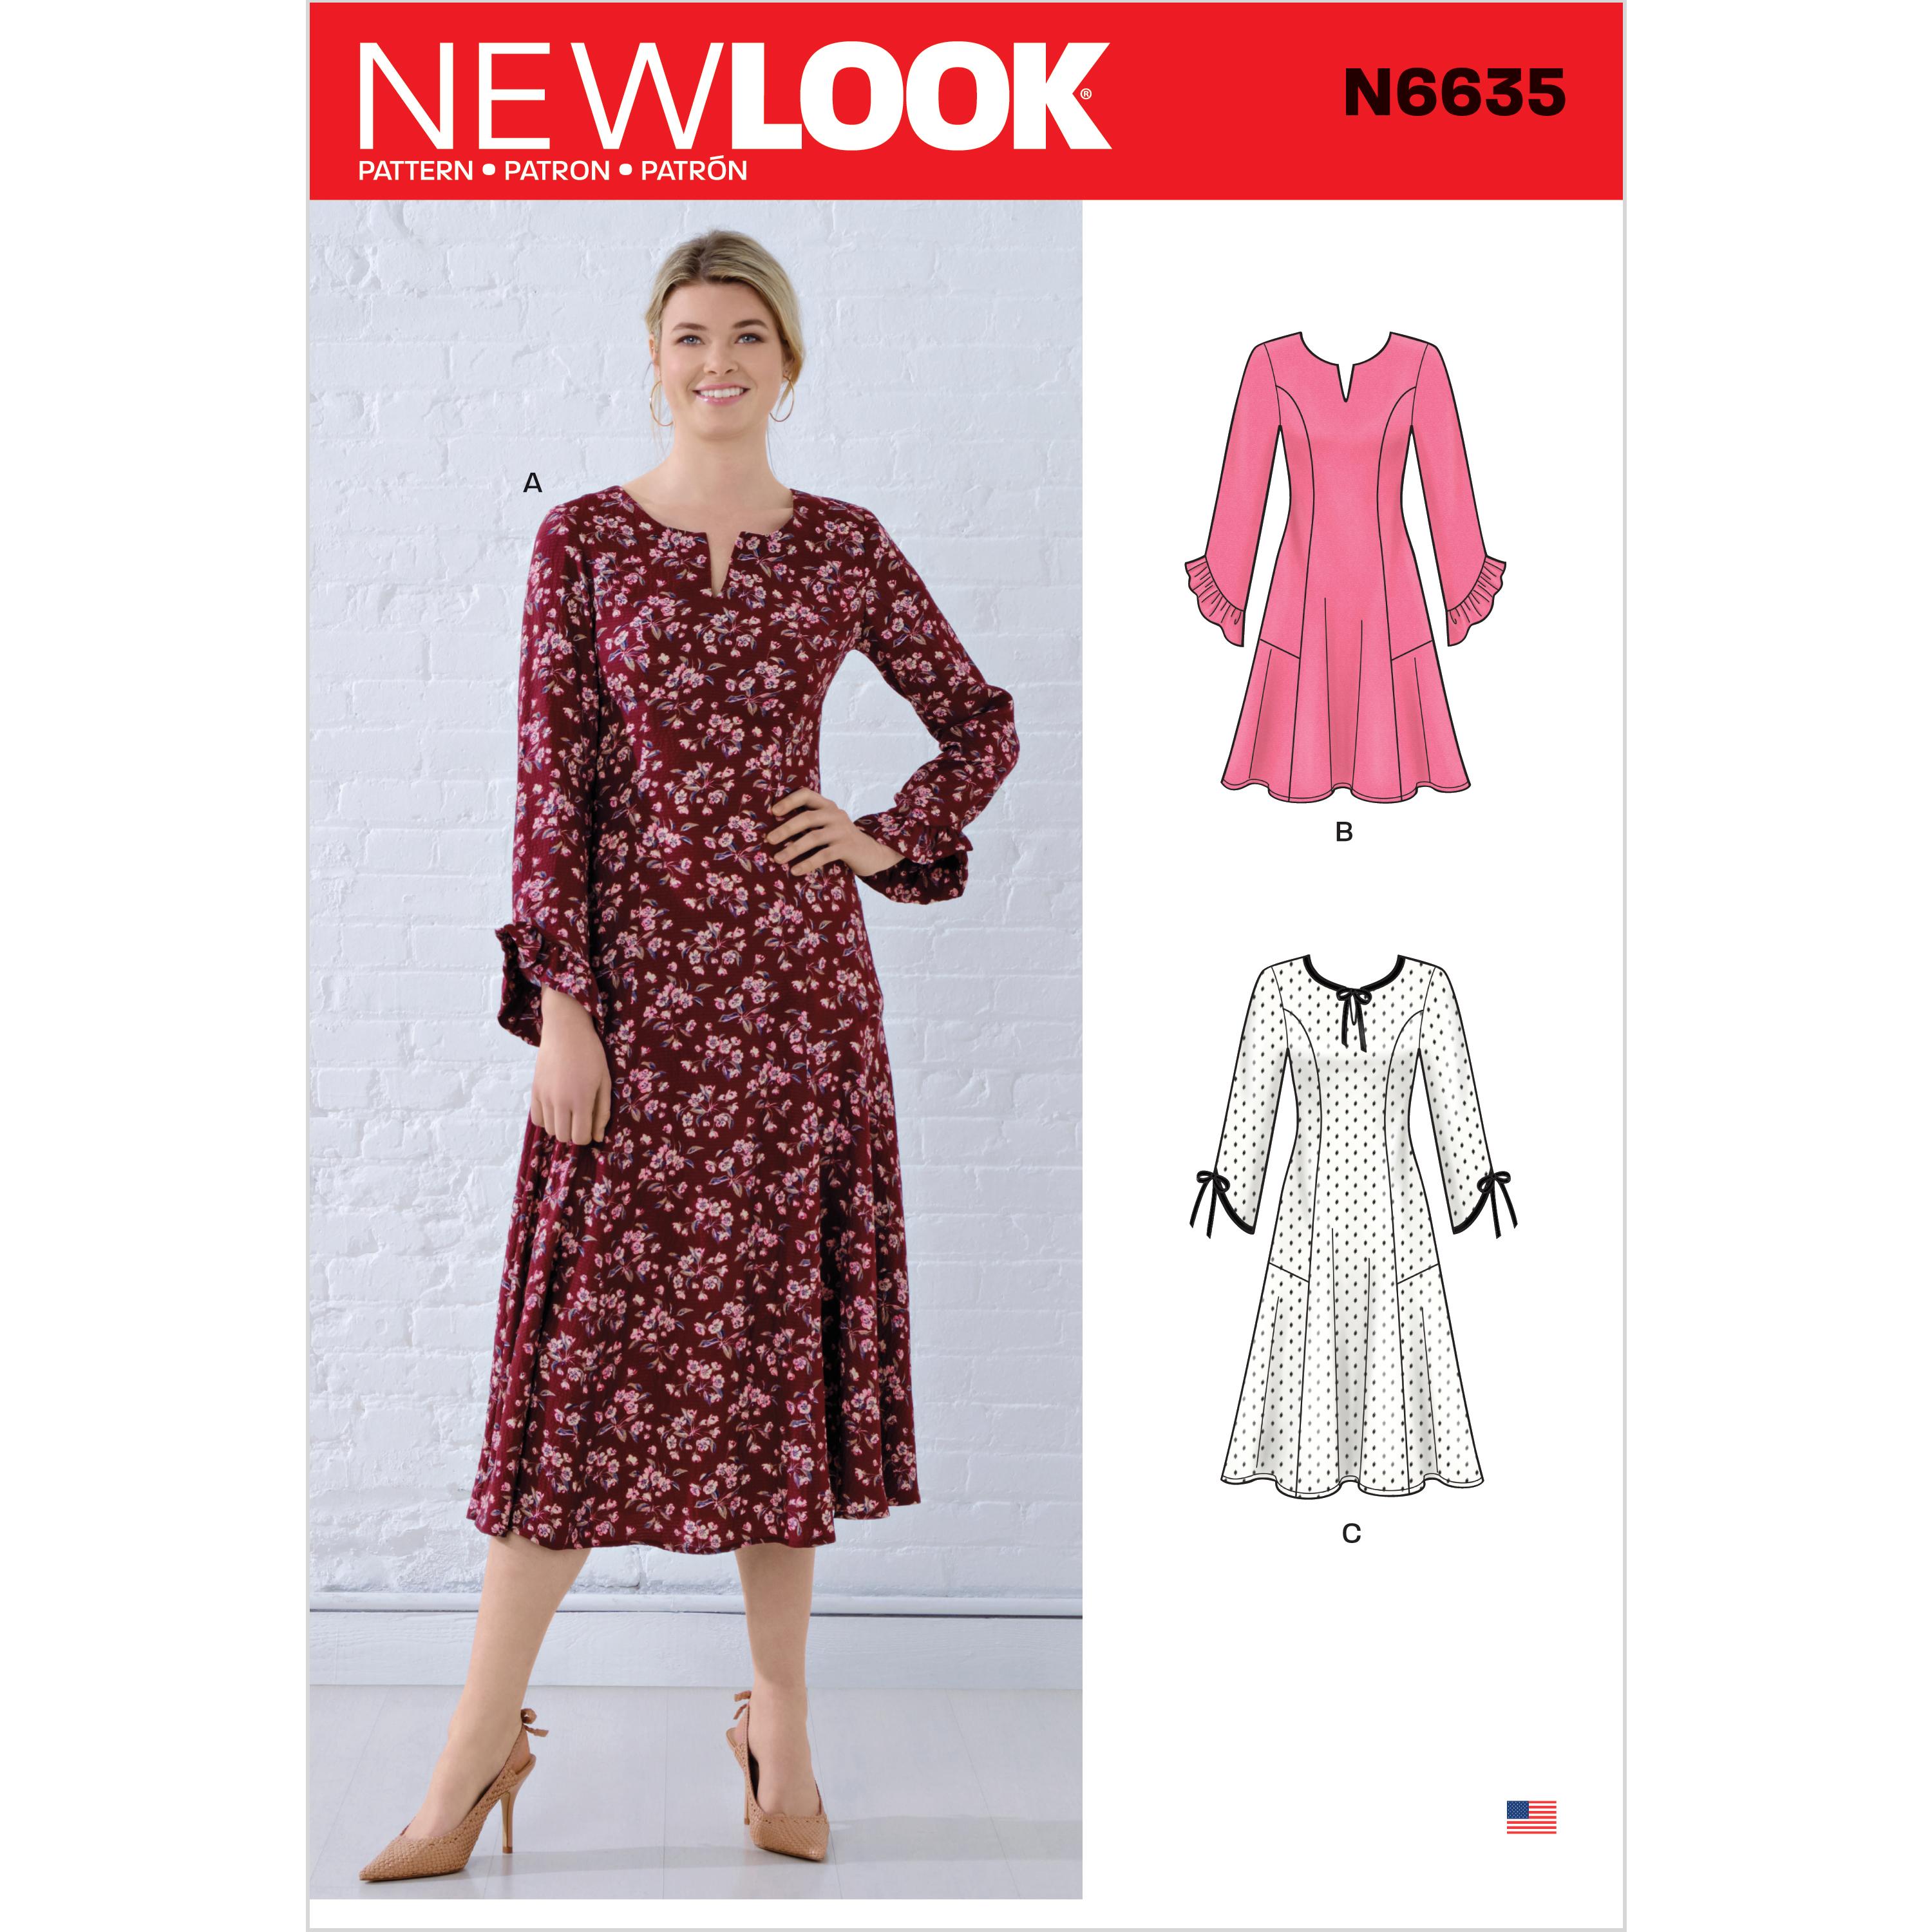 NewLook Sewing Pattern N6635 Misses' Princess Seamed Dresses